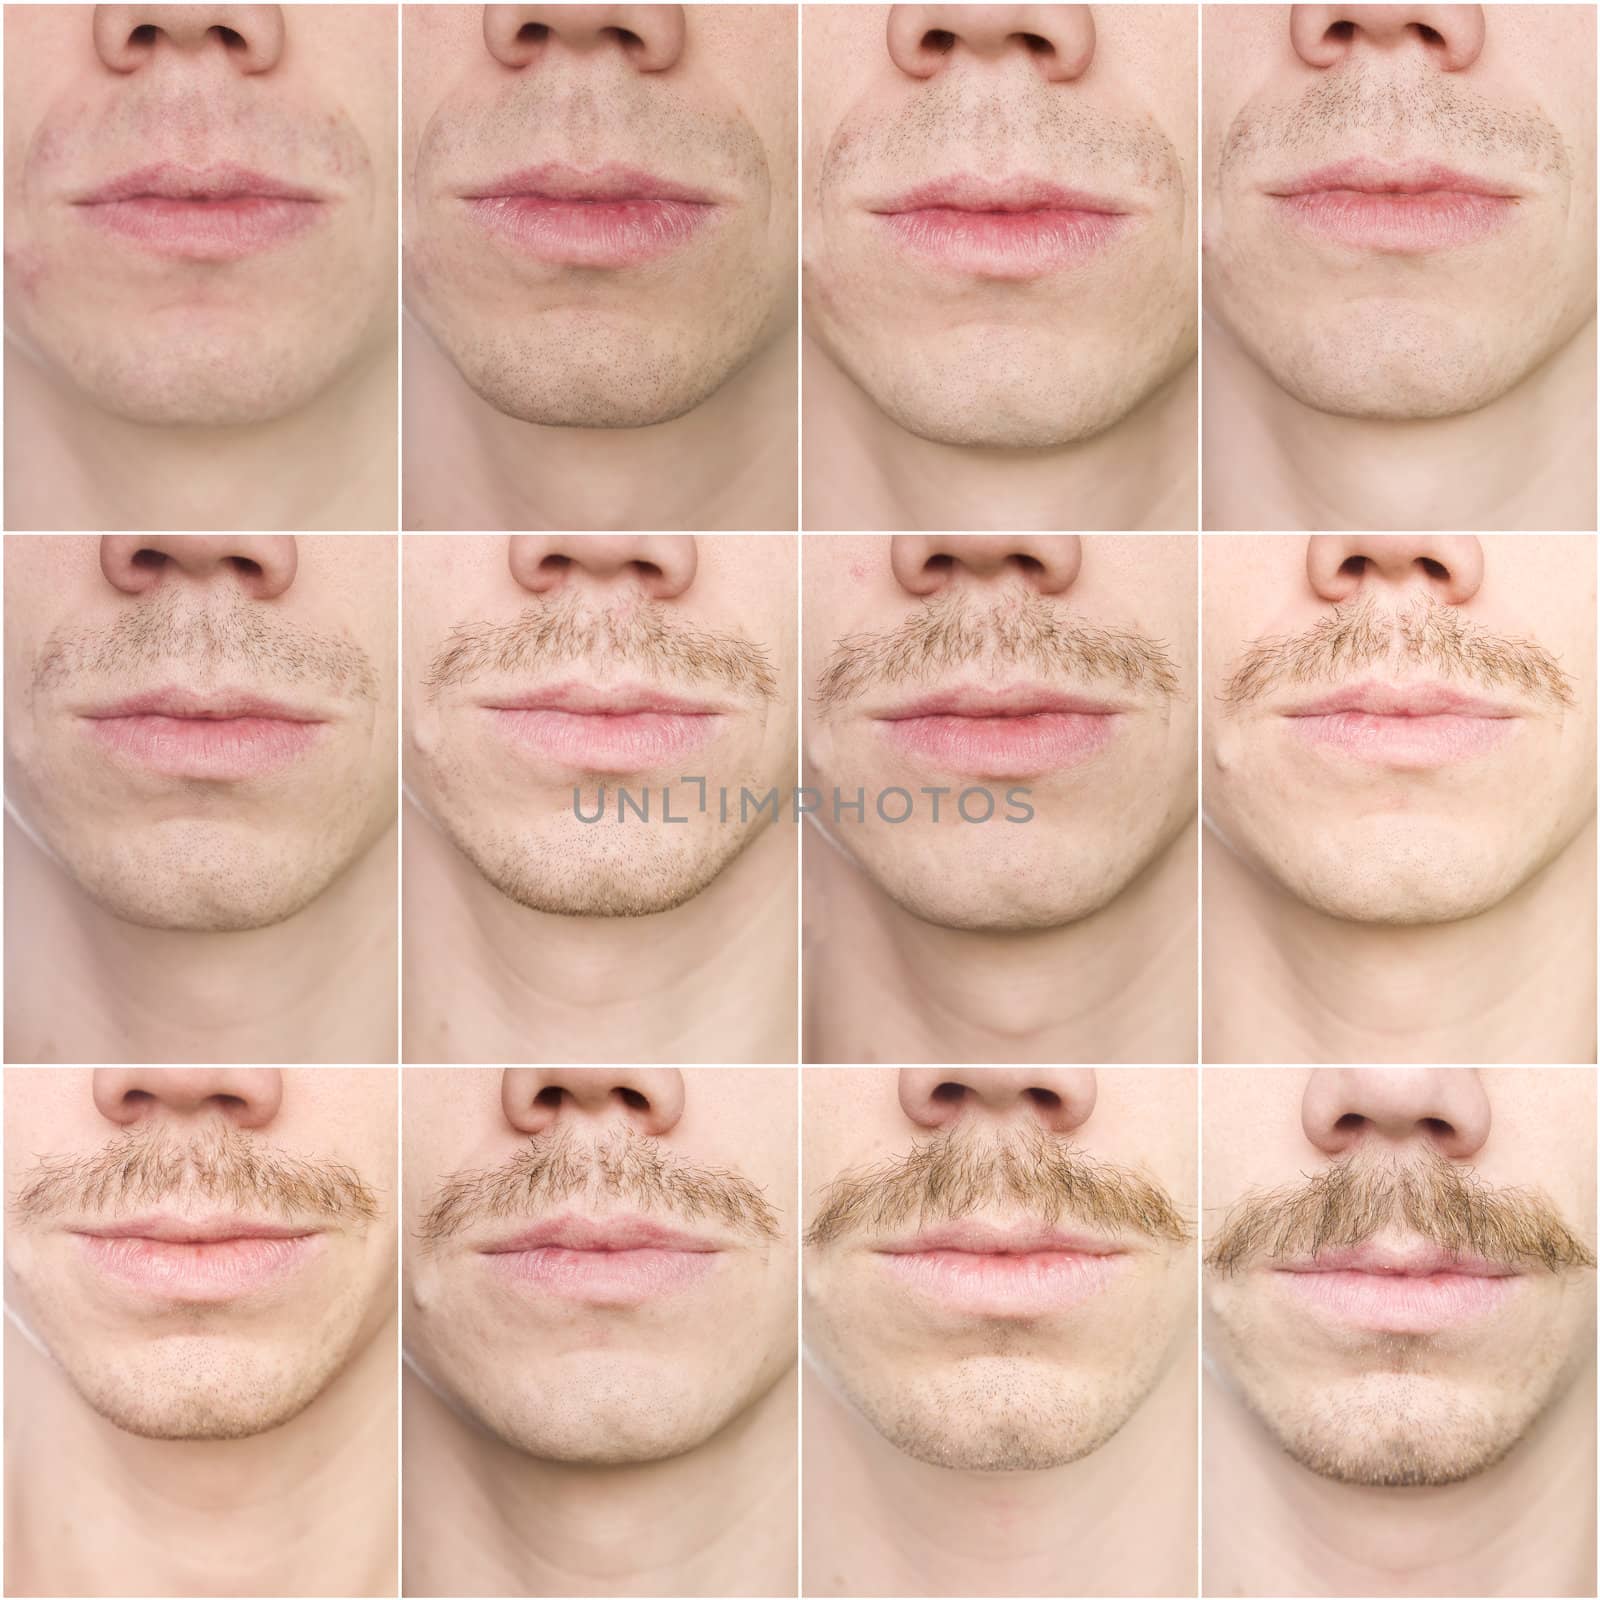 Mustache growing by gemenacom